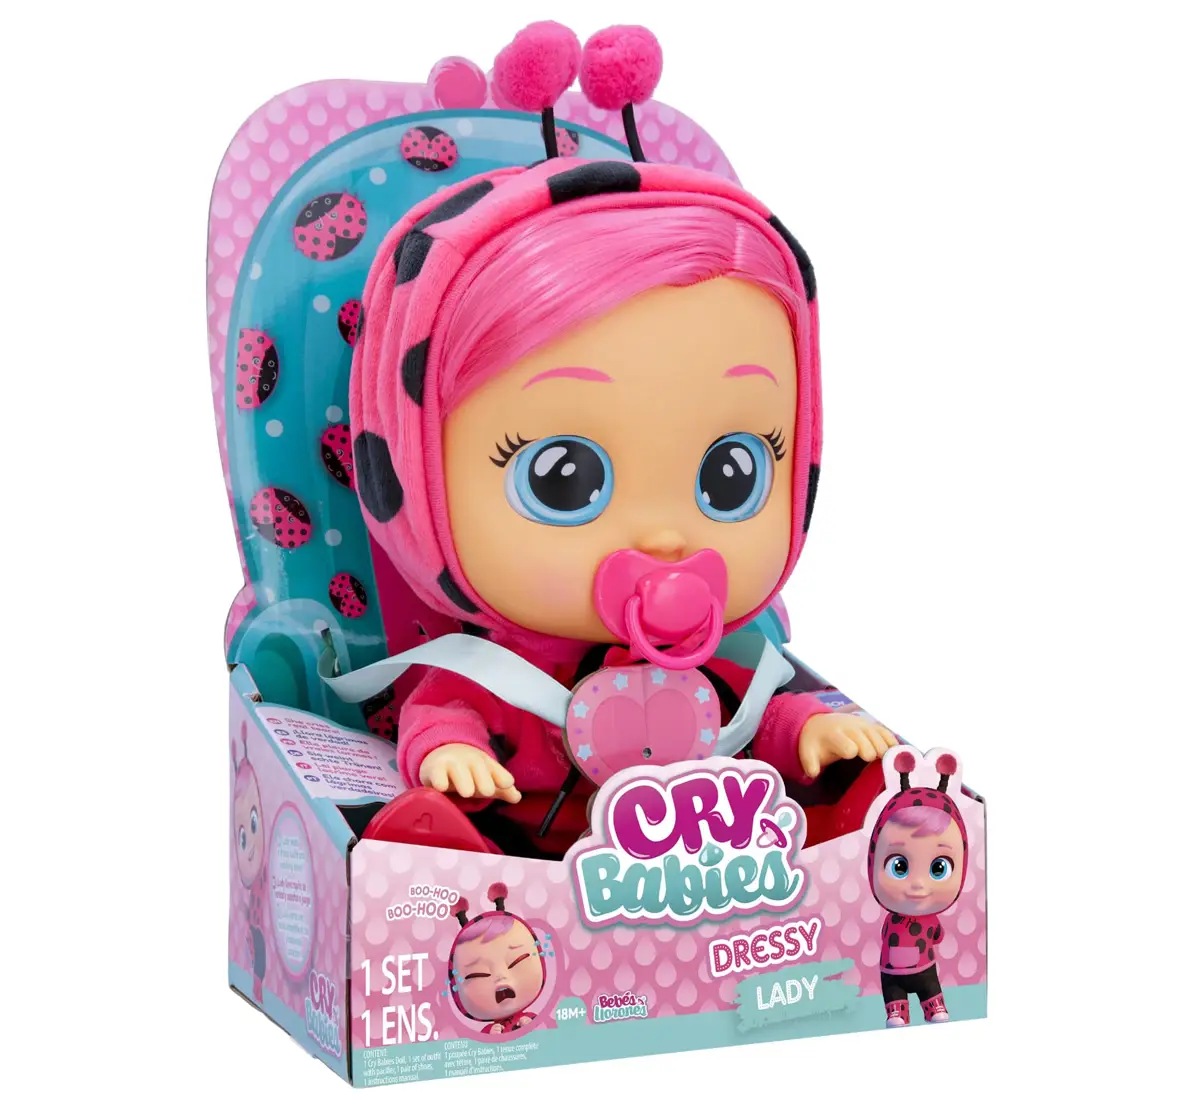 Cry Babies Dressy Lady Dolls For Kids, 18M+